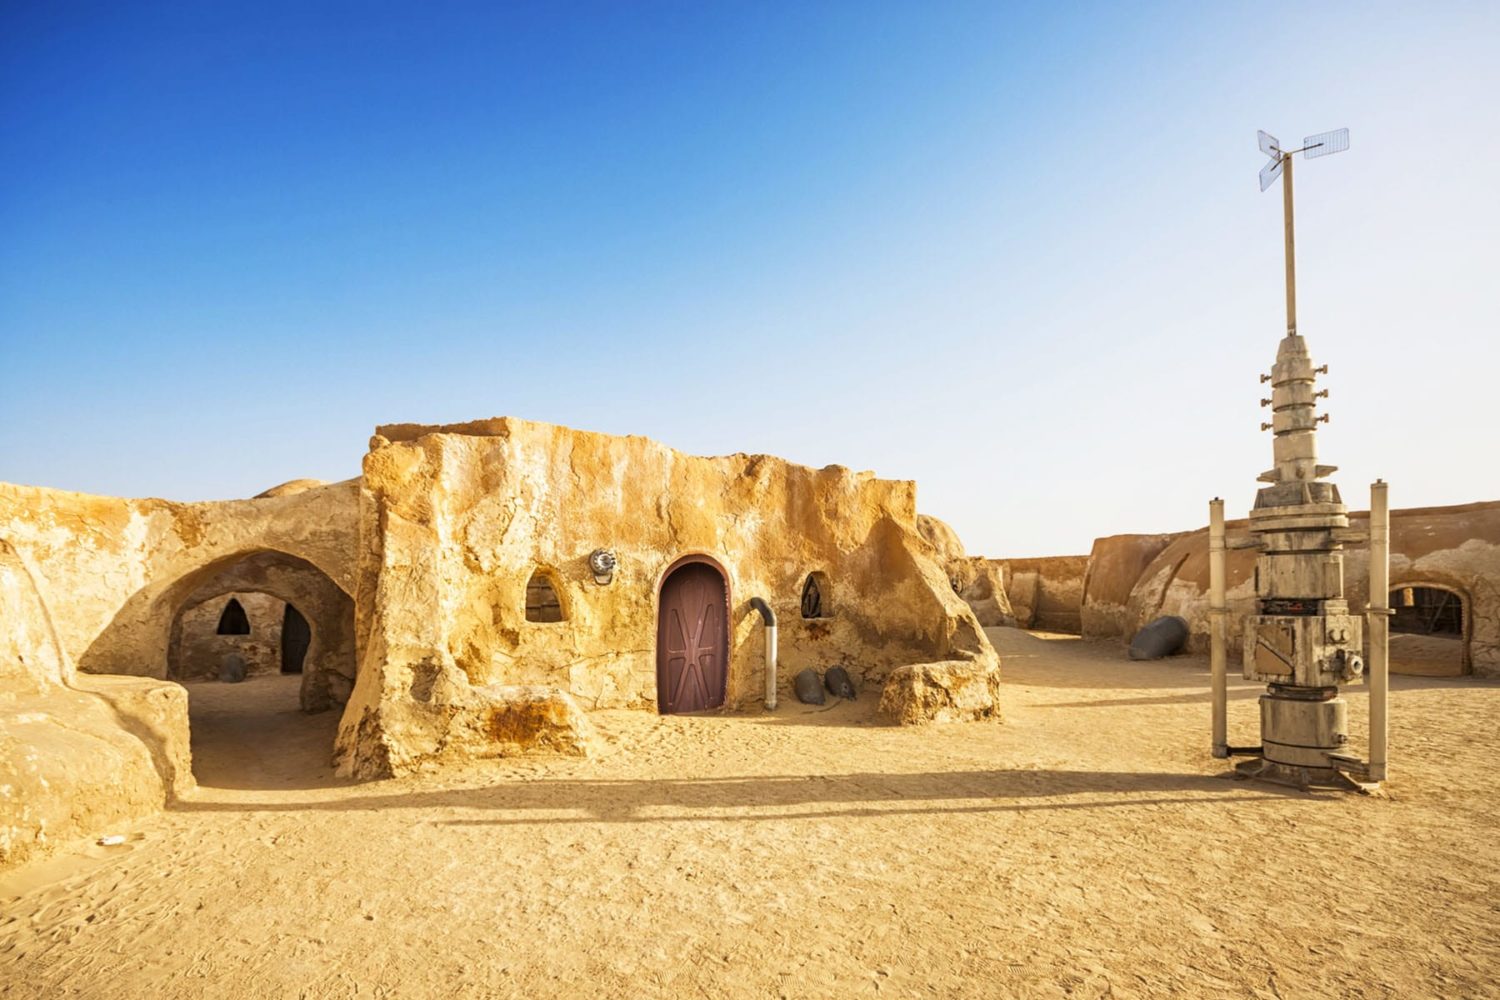 Ong Ejmel Star Wars Tunisia